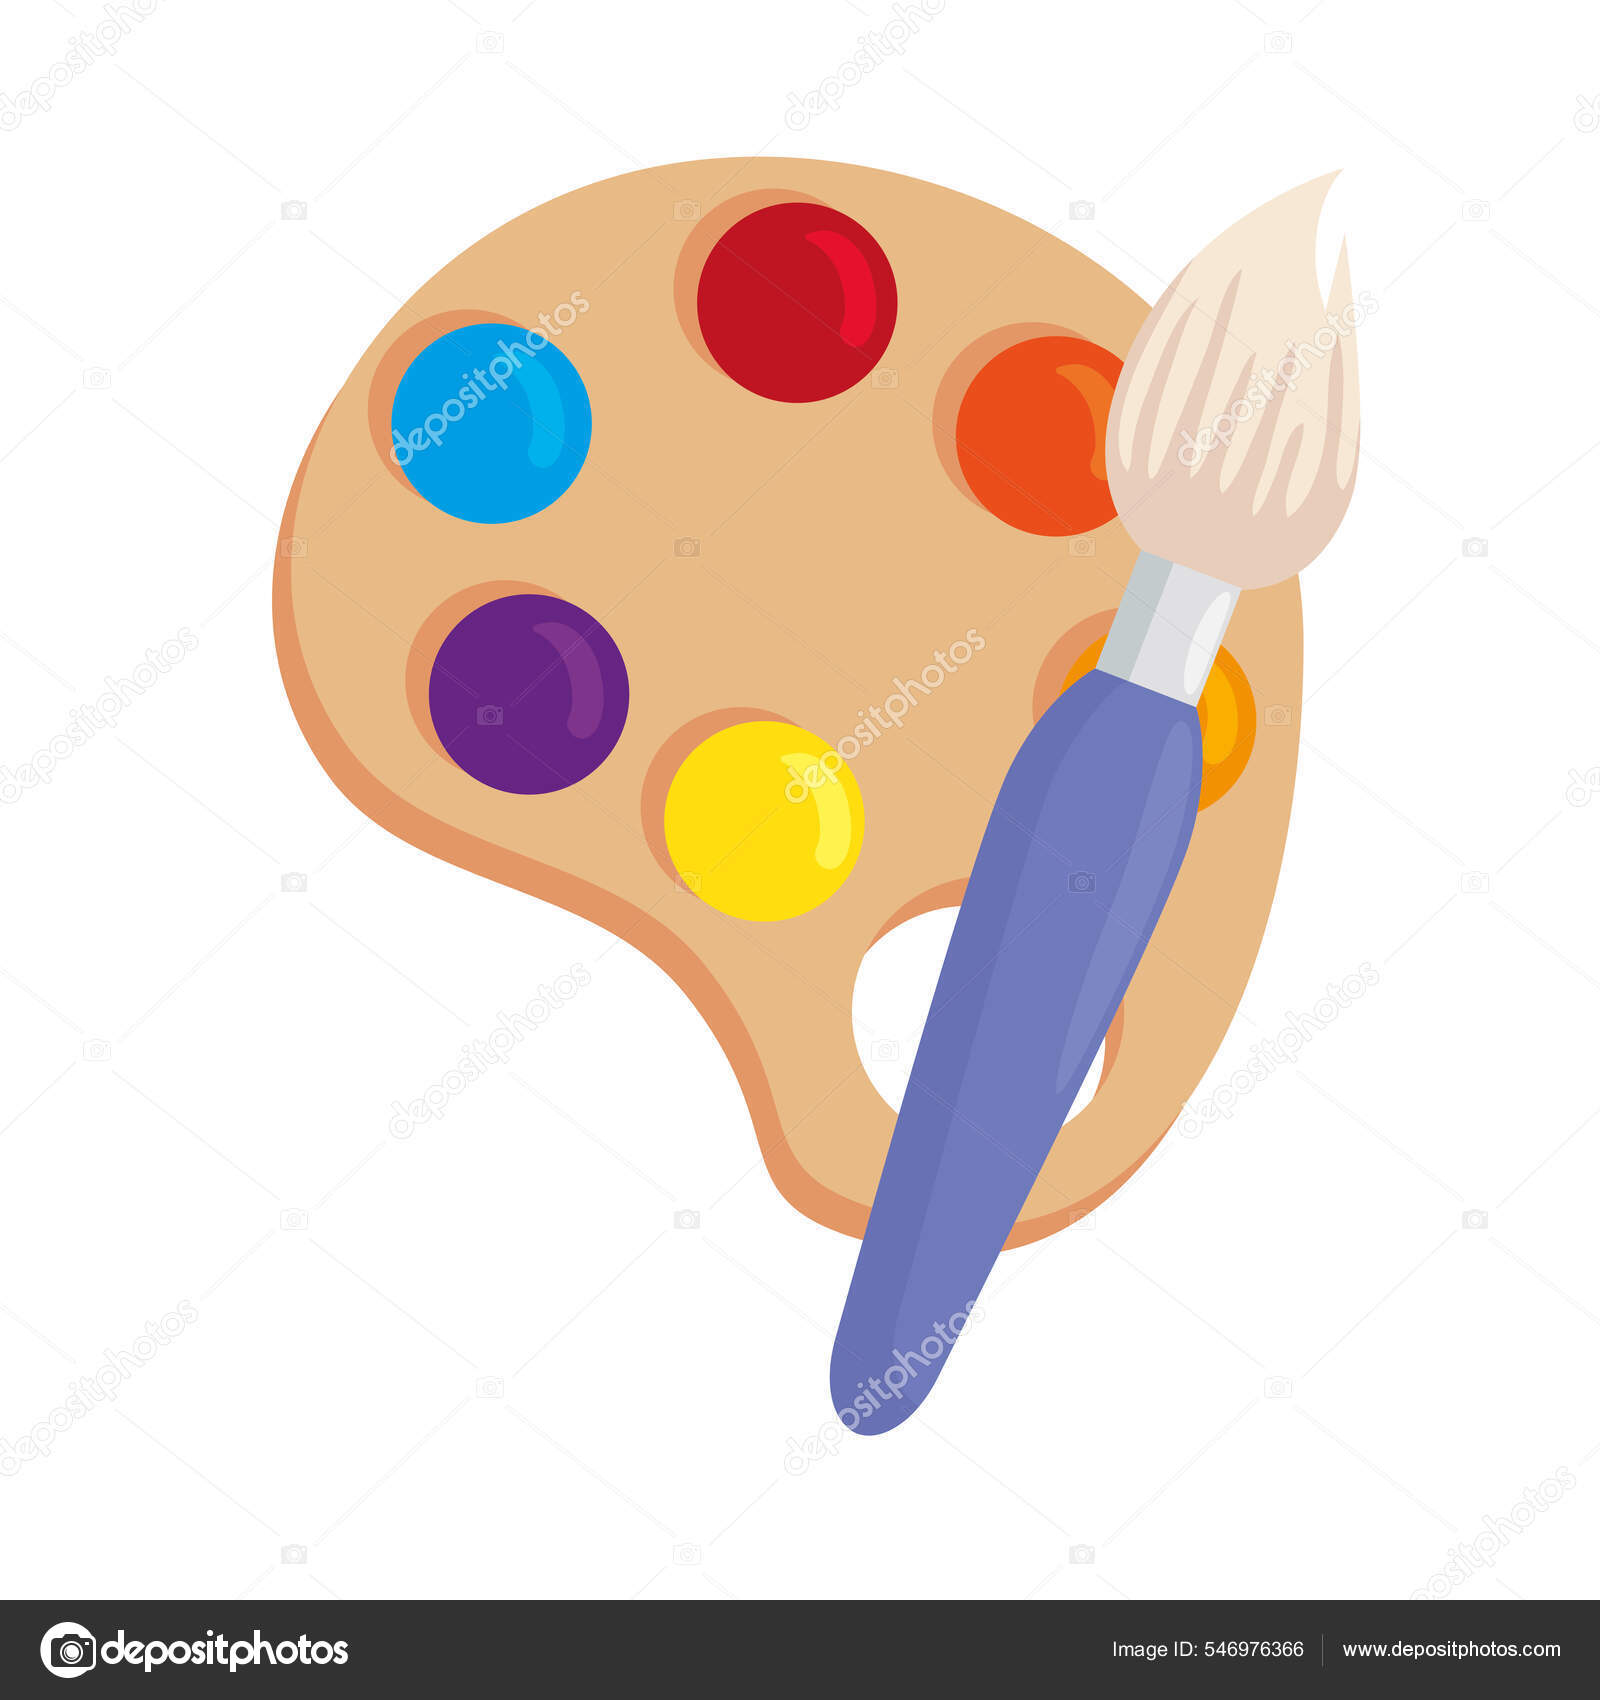 Color palette, color tray, paint bold, paint palette, painting, painting  tool, painting tray icon - Download on